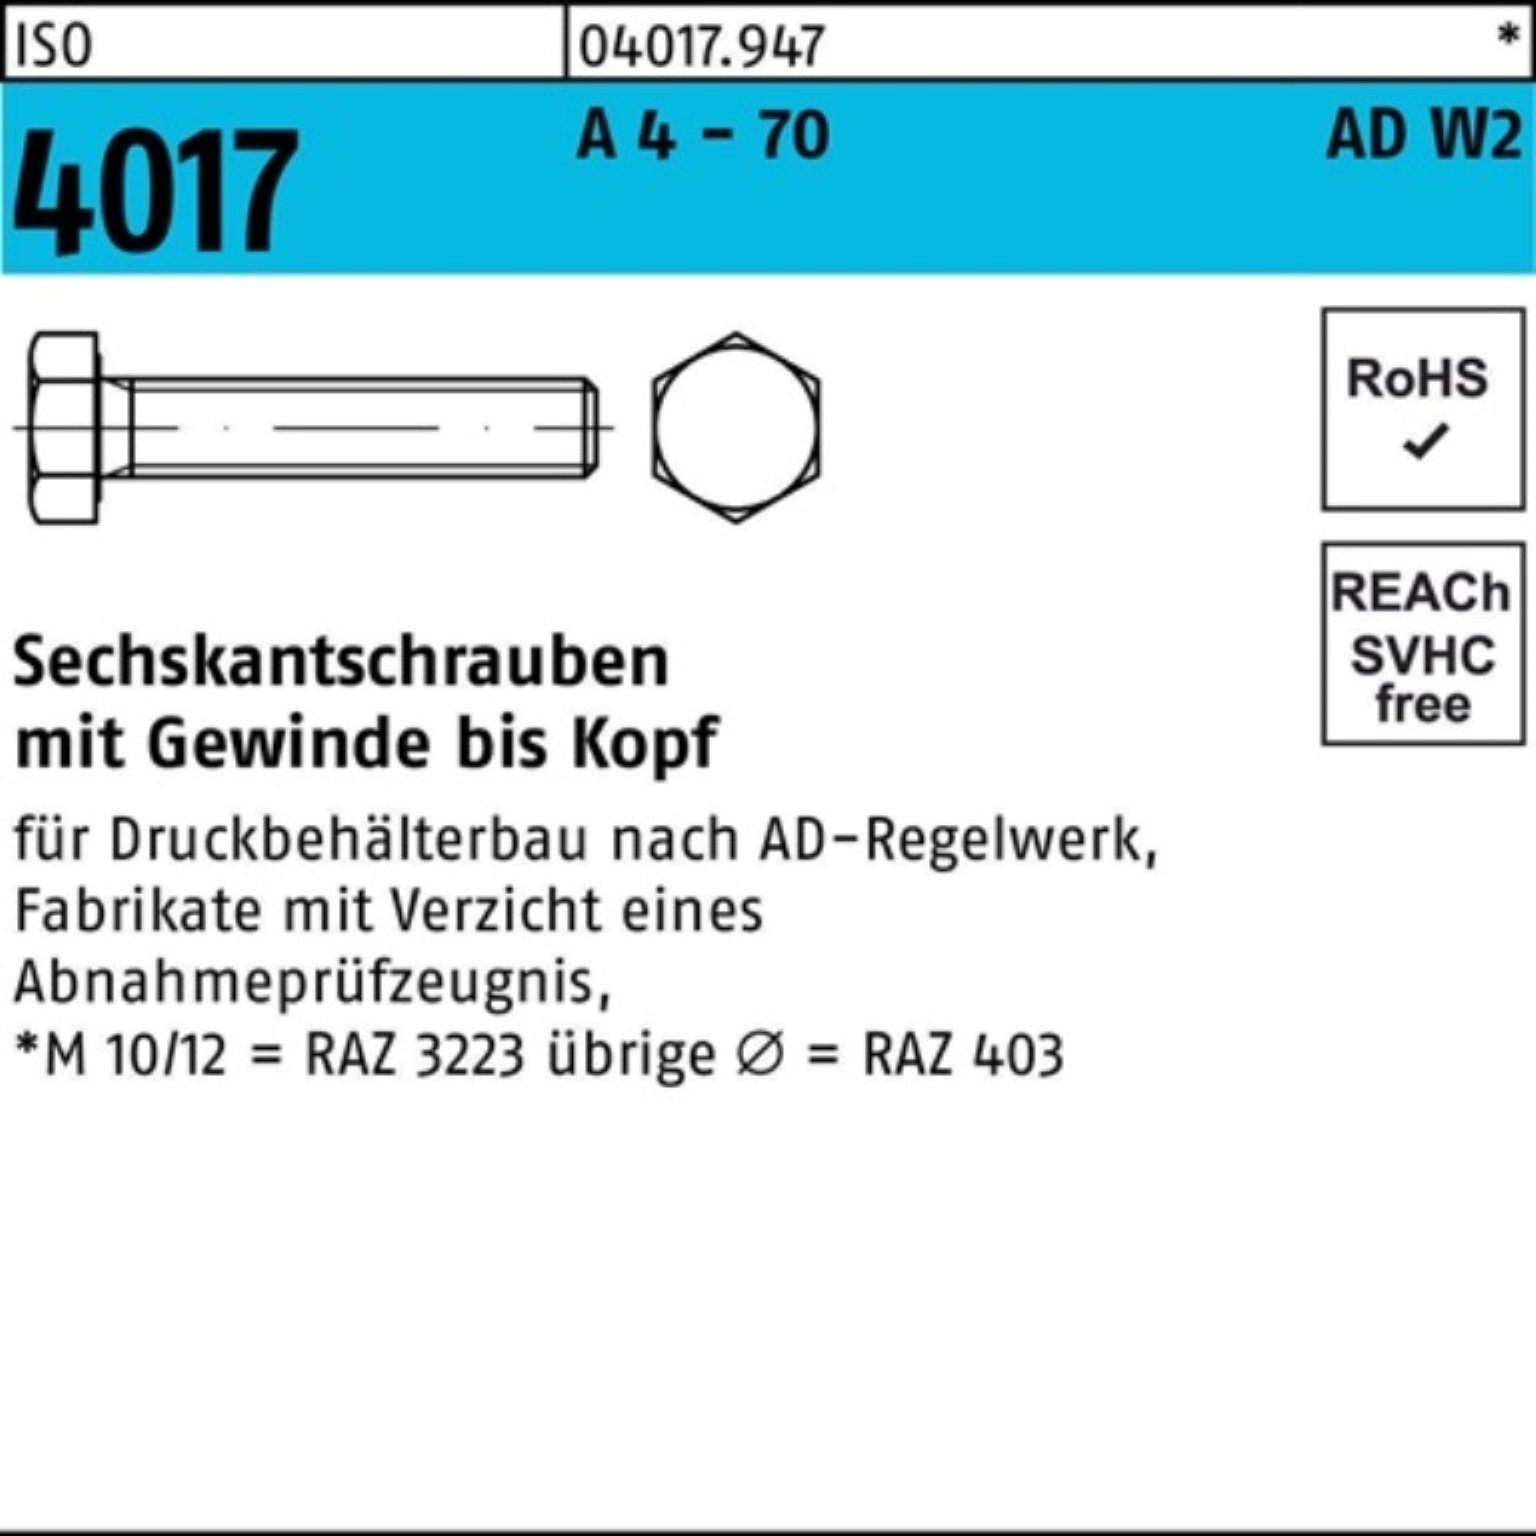 Bufab Sechskantschraube 100er Pack Sechskantschraube ISO 4017 VG M6x 30 A 4 - 70 AD-W2 100 St